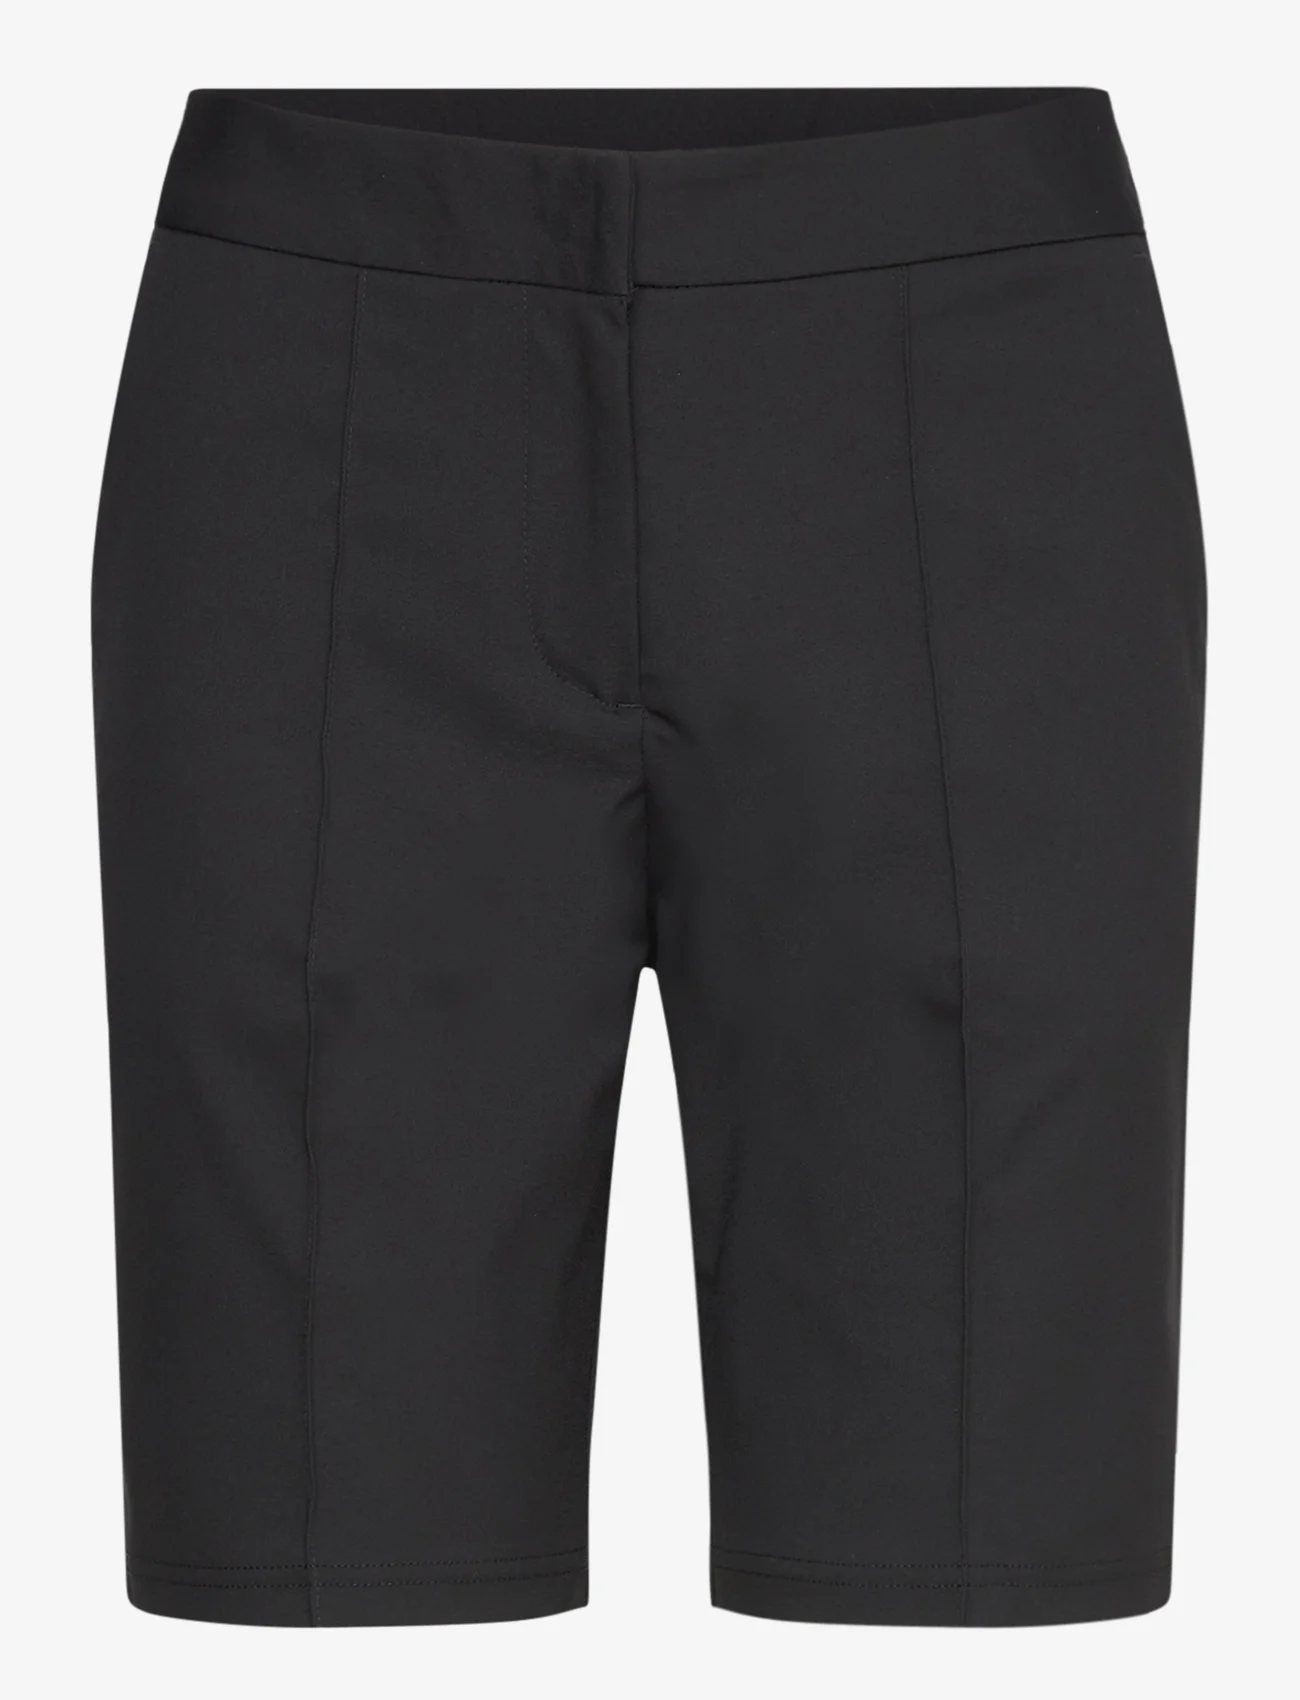 PUMA Golf - W Costa Short 8.5" - sports shorts - puma black - 0